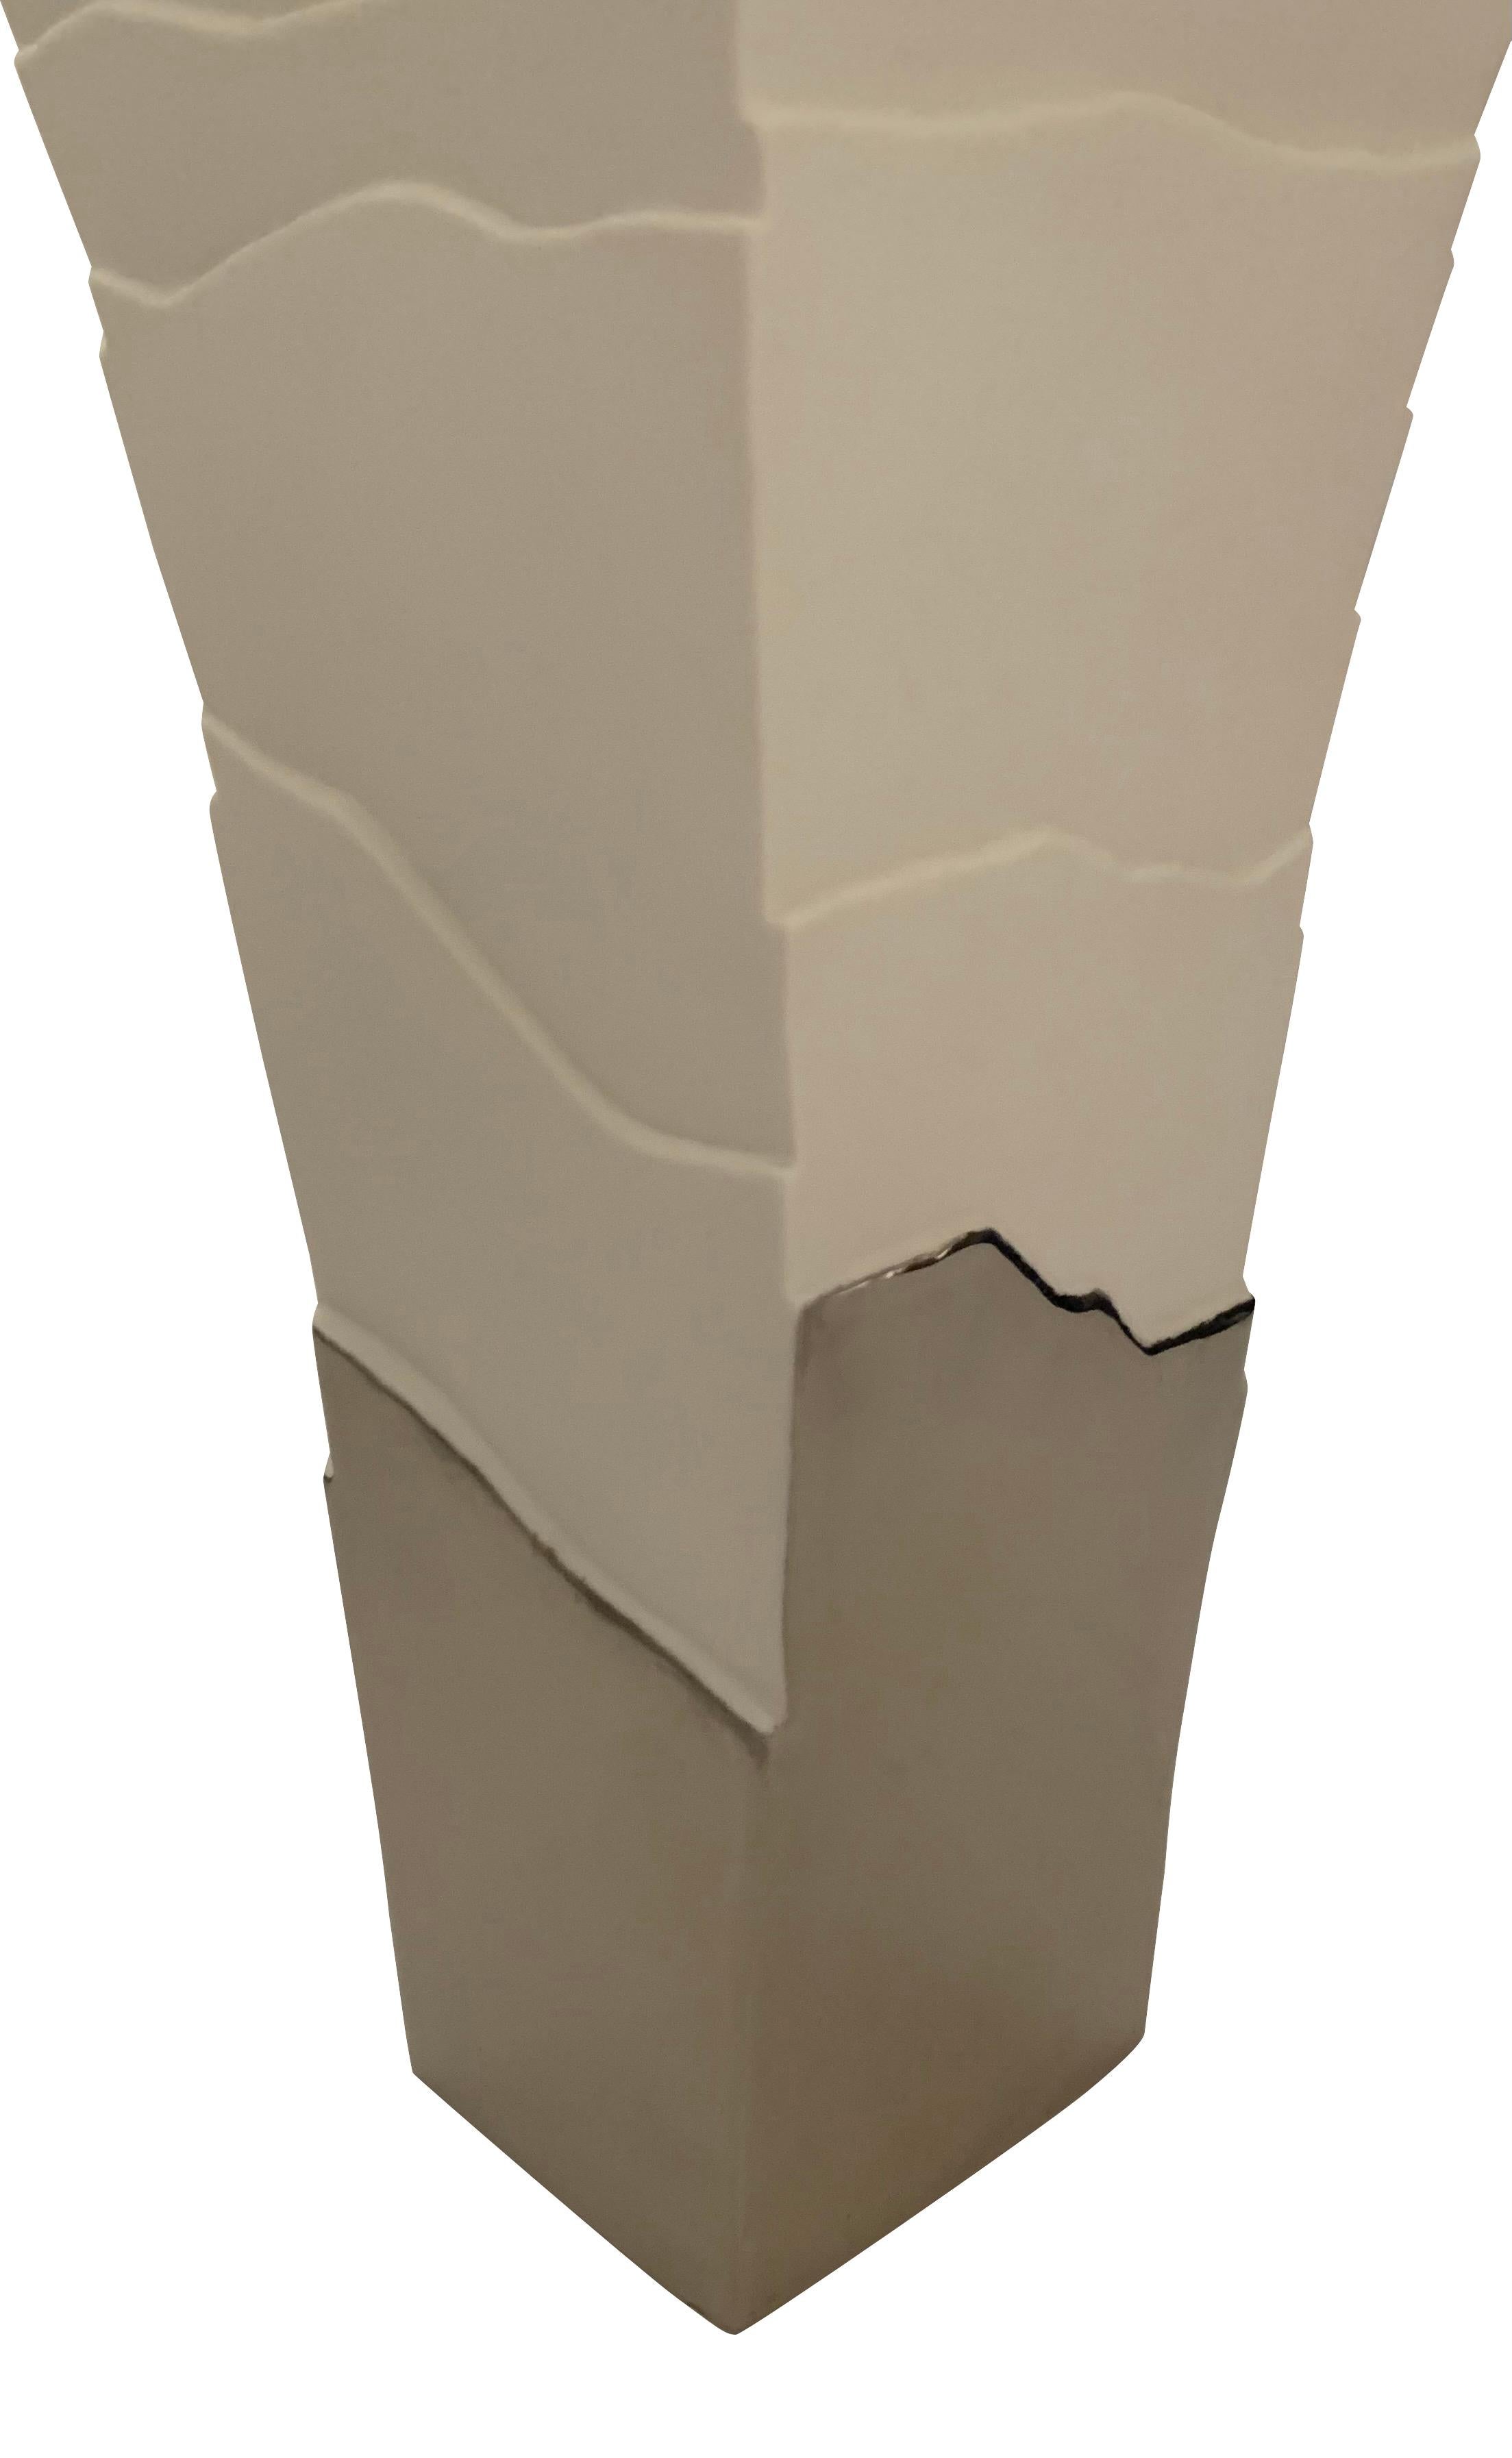 Contemporary Italian handmade white porcelain vase with platinum top and bottom.
White wavy rib design with smooth platinum top and bottom.
